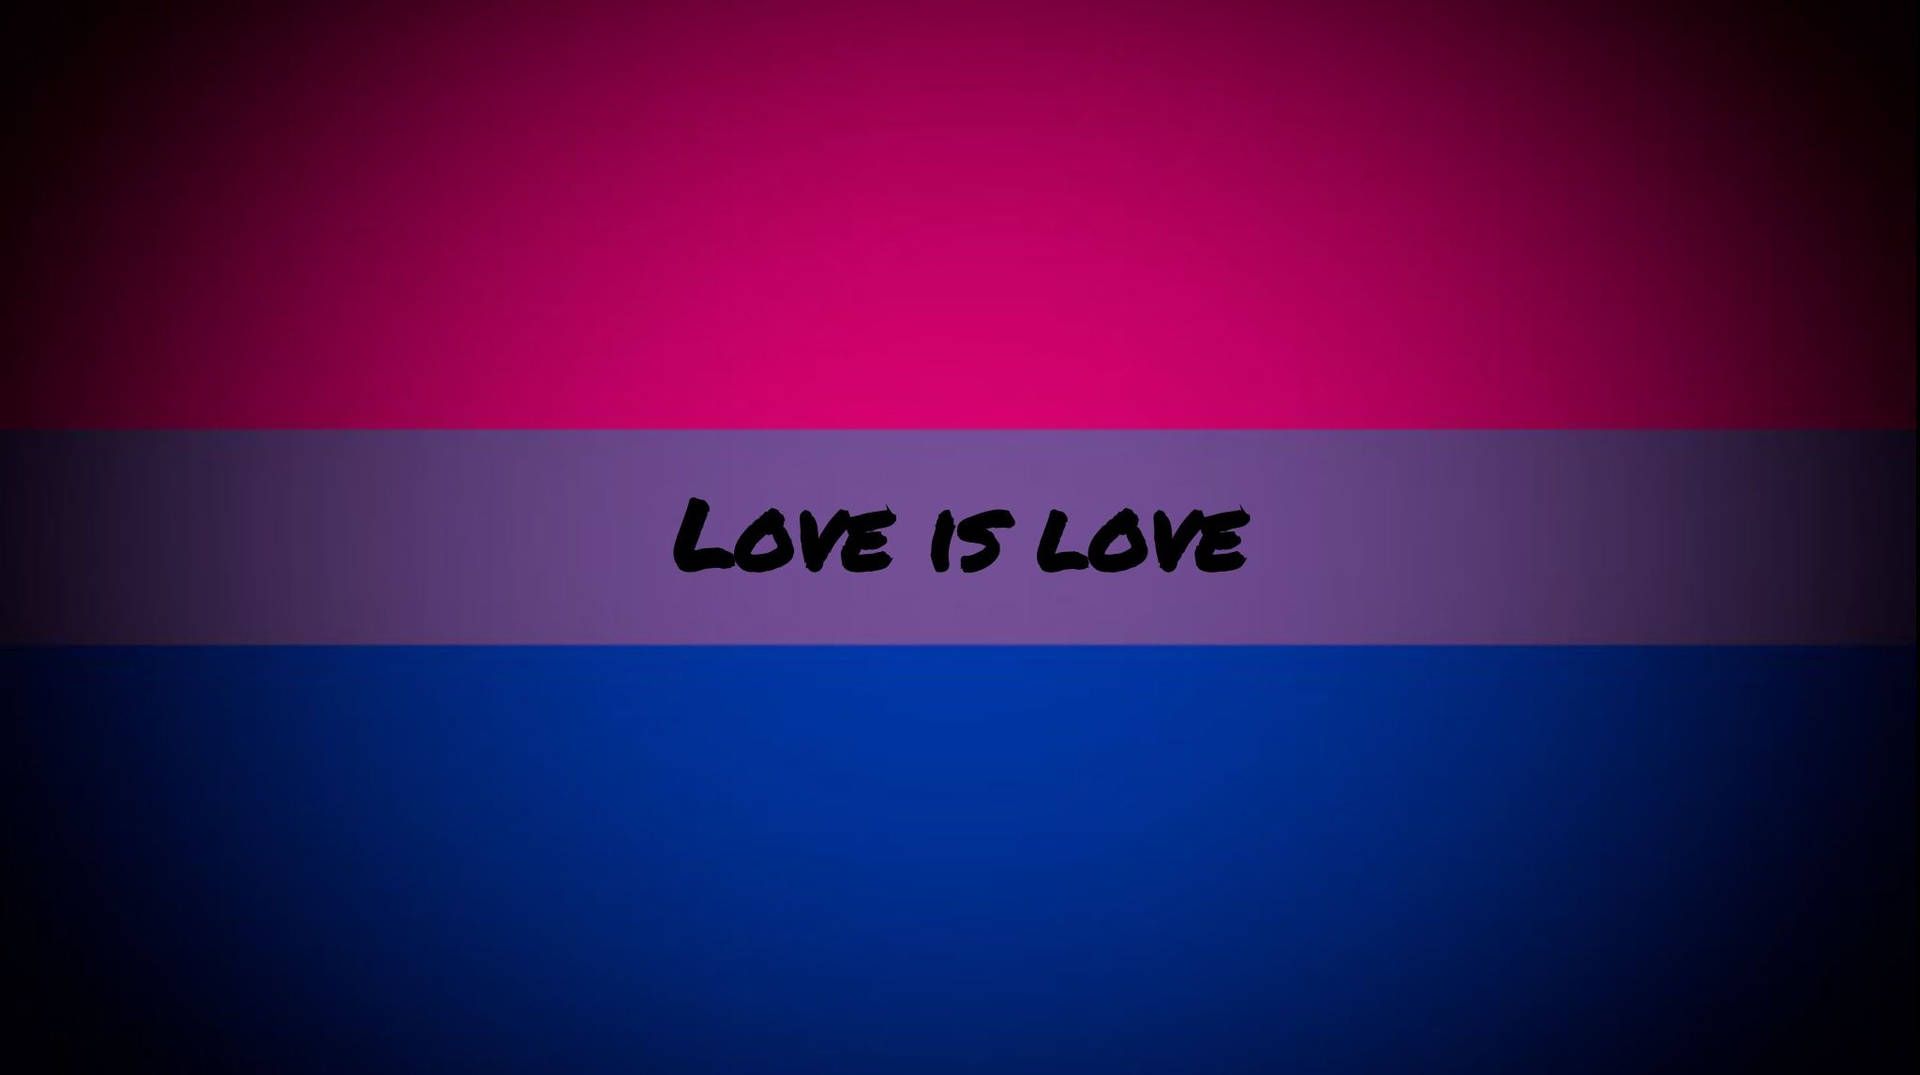 Free Bisexual Flag Wallpaper Downloads, Bisexual Flag Wallpaper for FREE